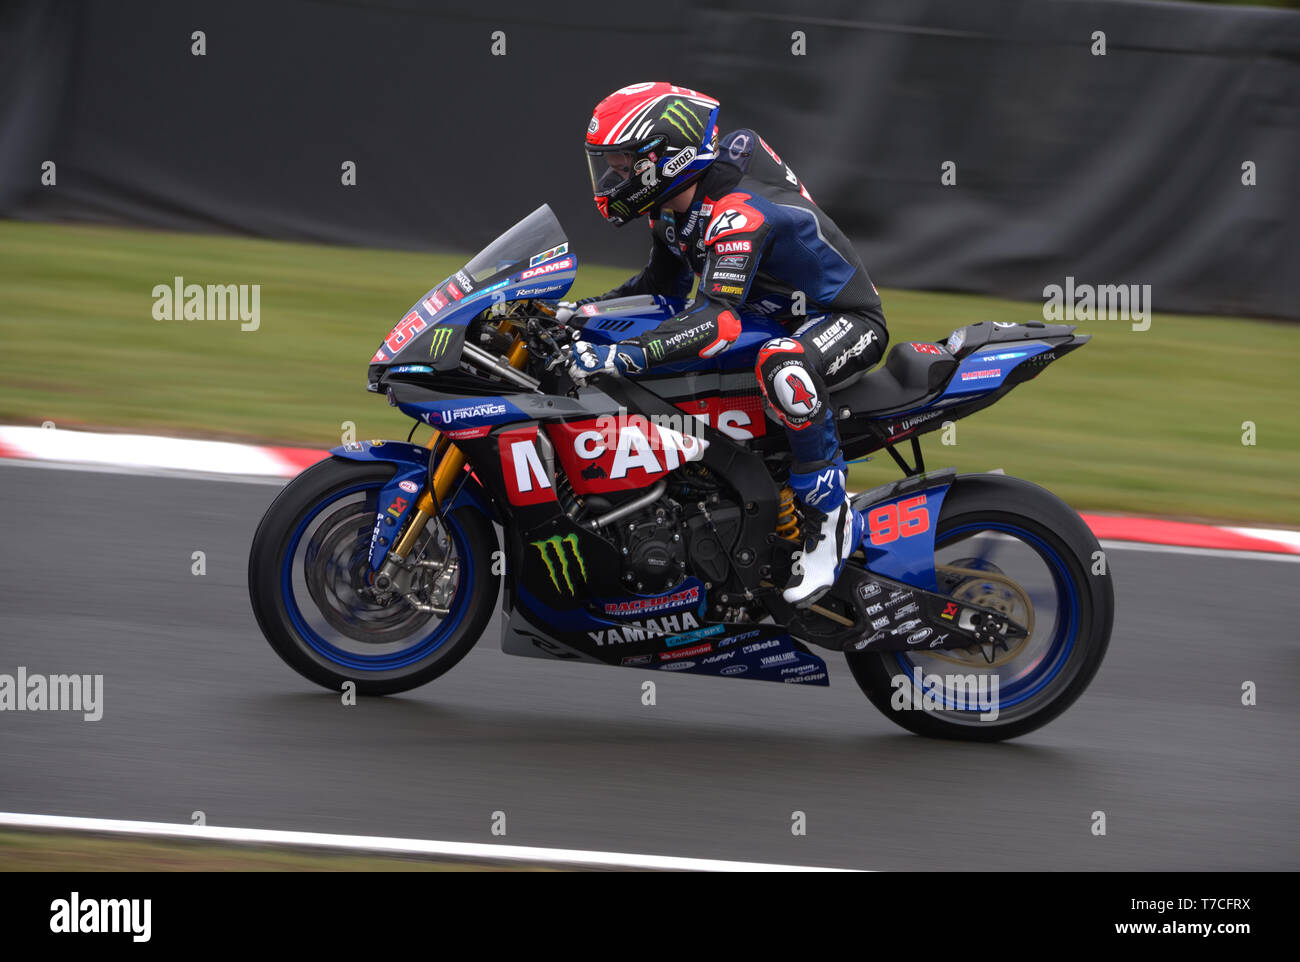 Tarrran Mackenzie riding a Yamaha R1 at Oulton park Stock Photo